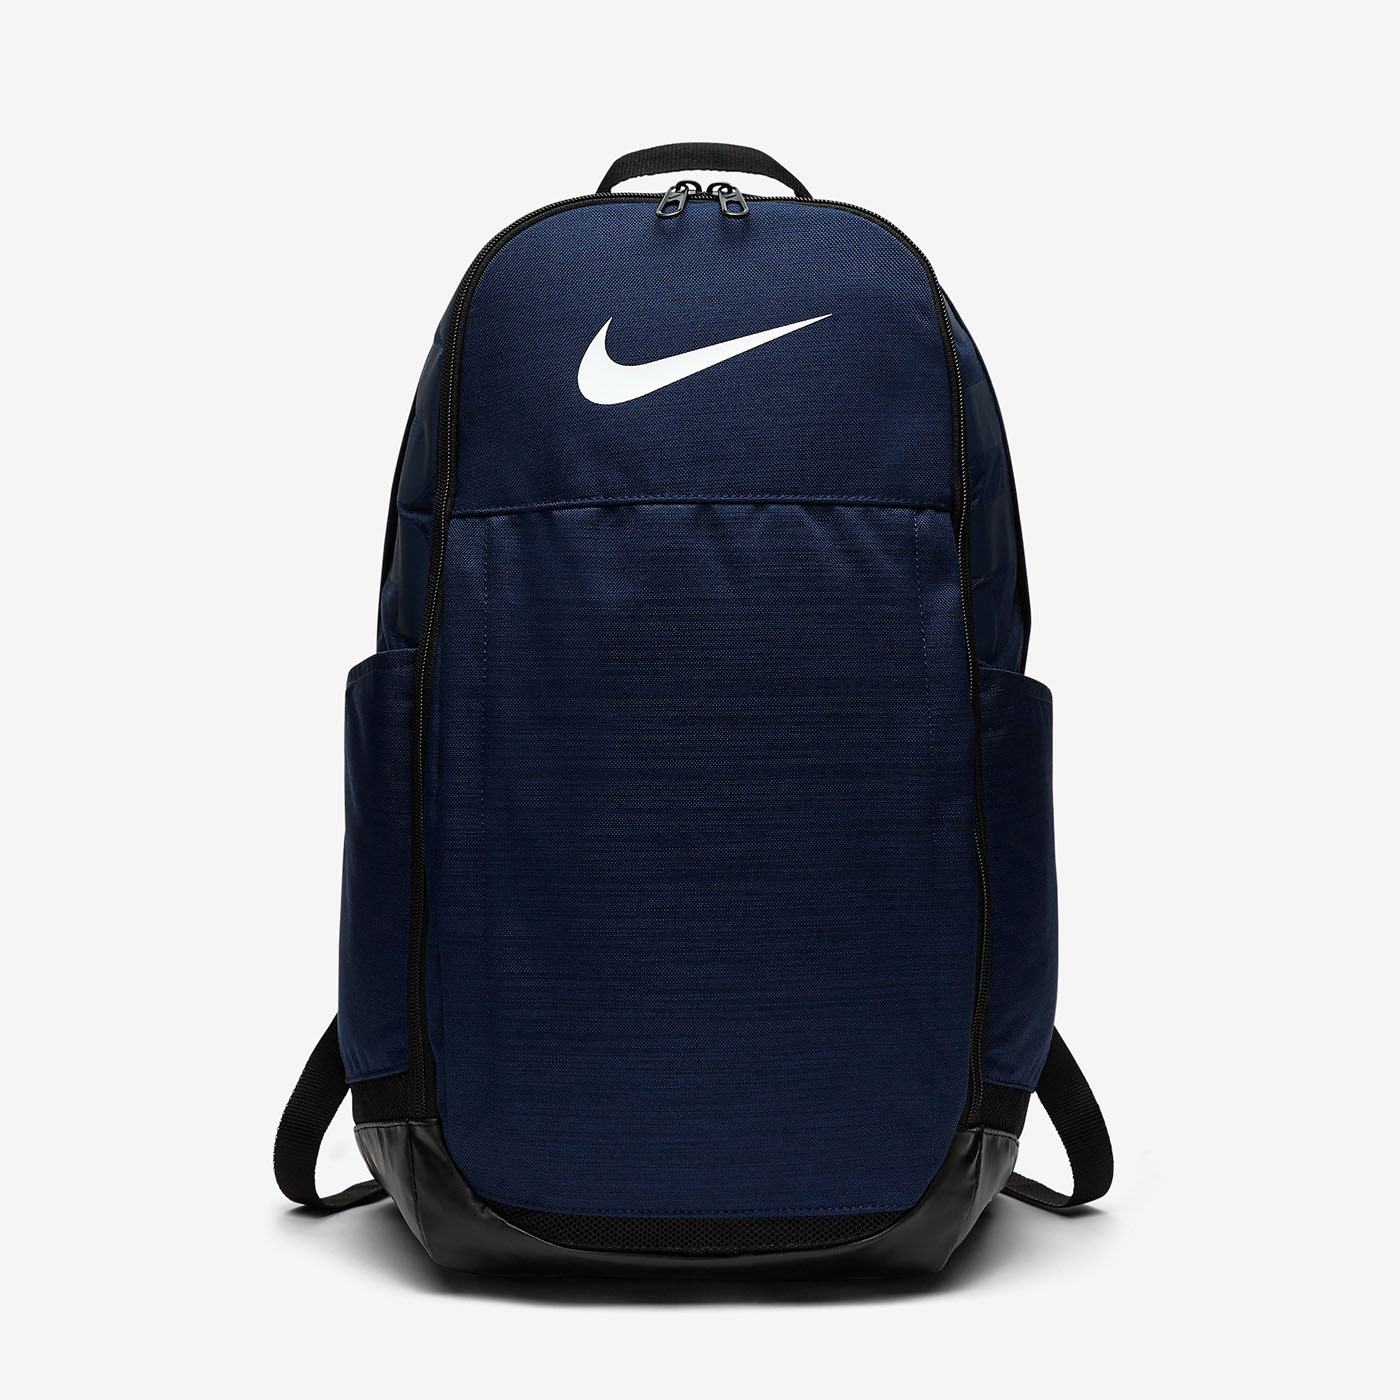 bag design soft goods soft goods design duffel backpack Nike Coated Material melange effect men's training